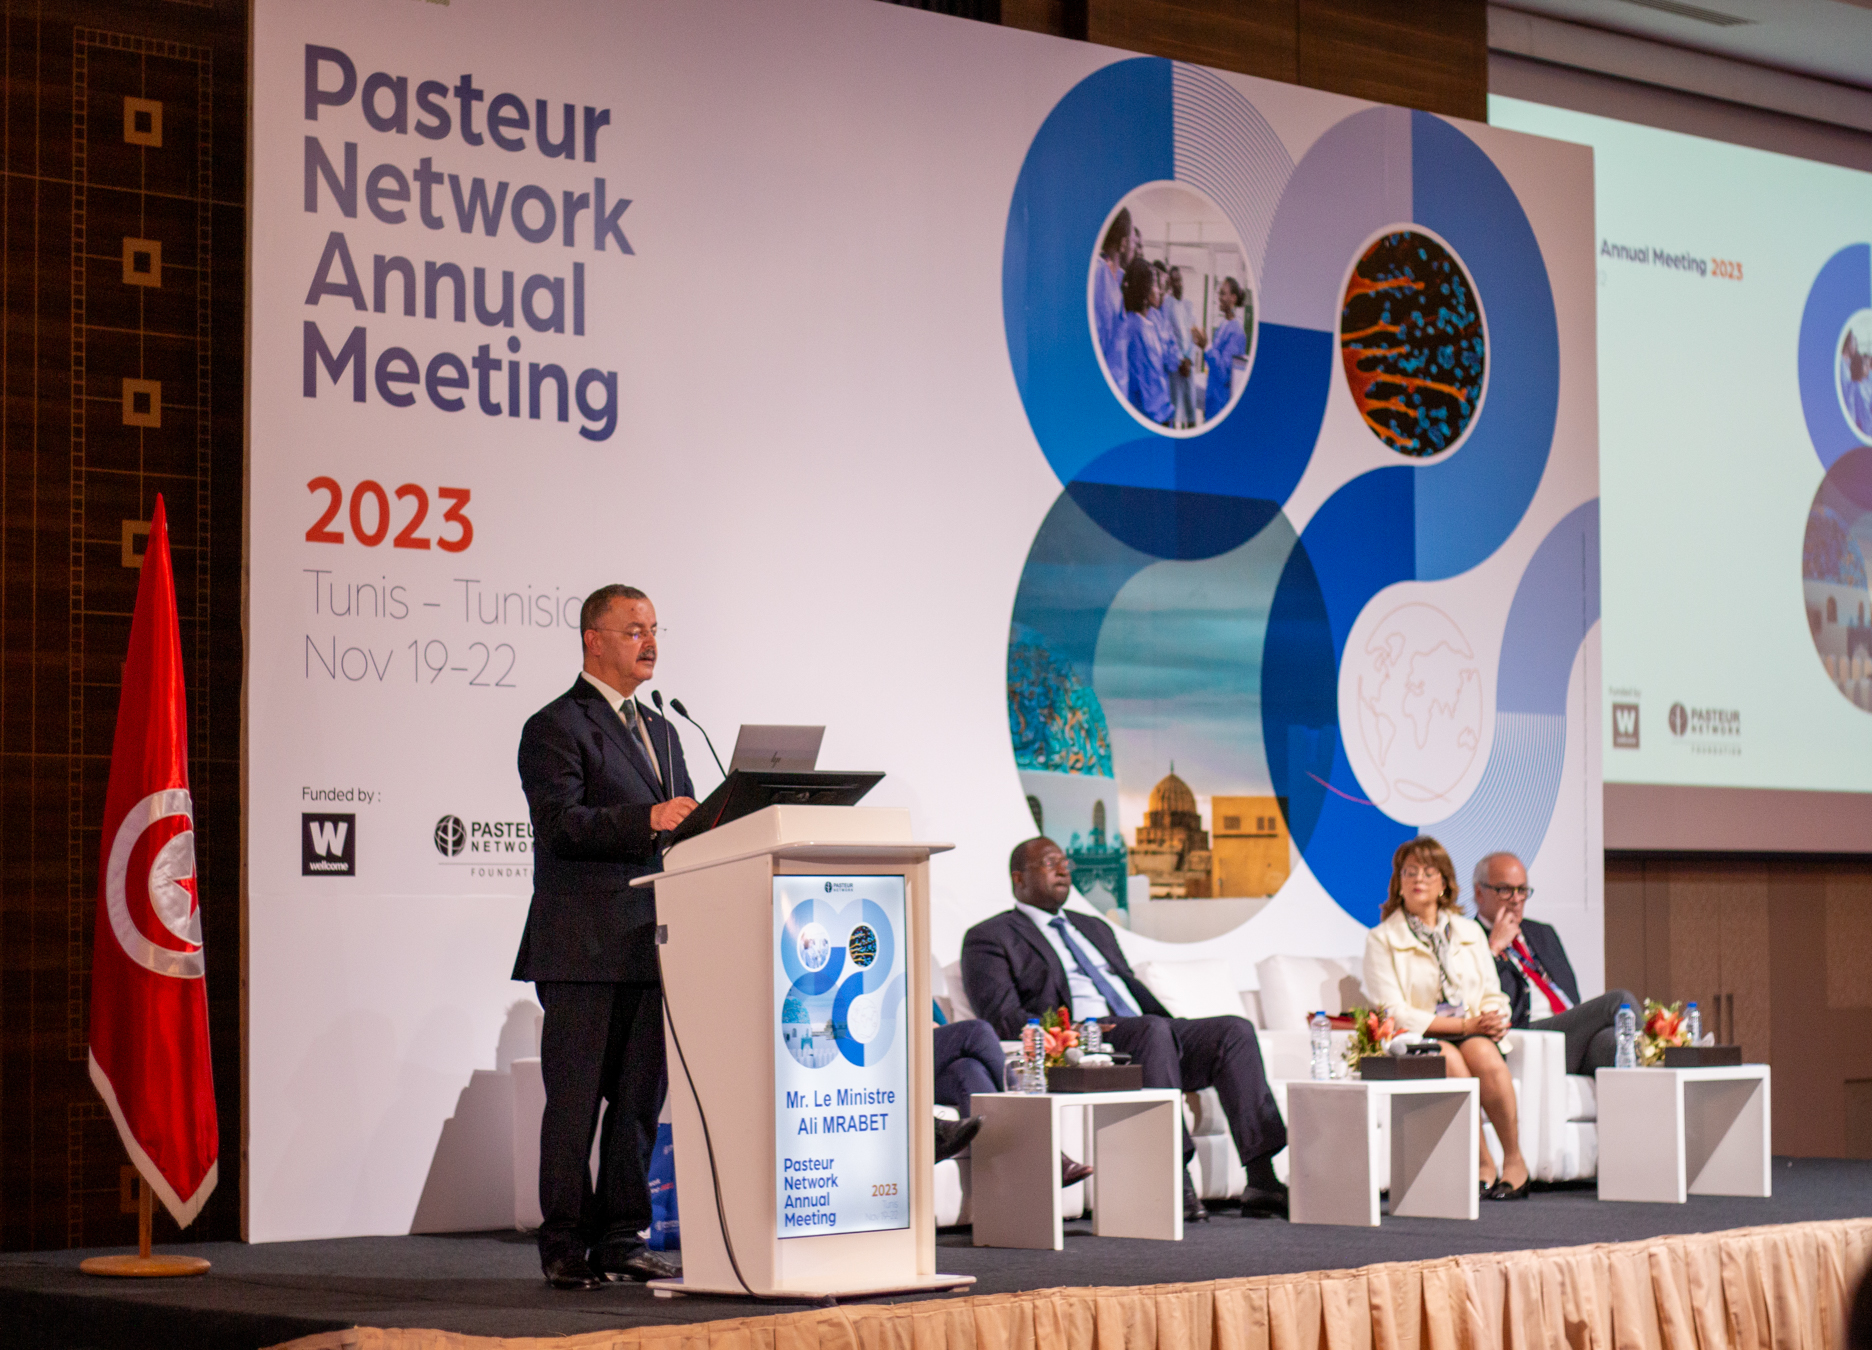 Pasteur Network Annual Meeting 2023 (PNAM)